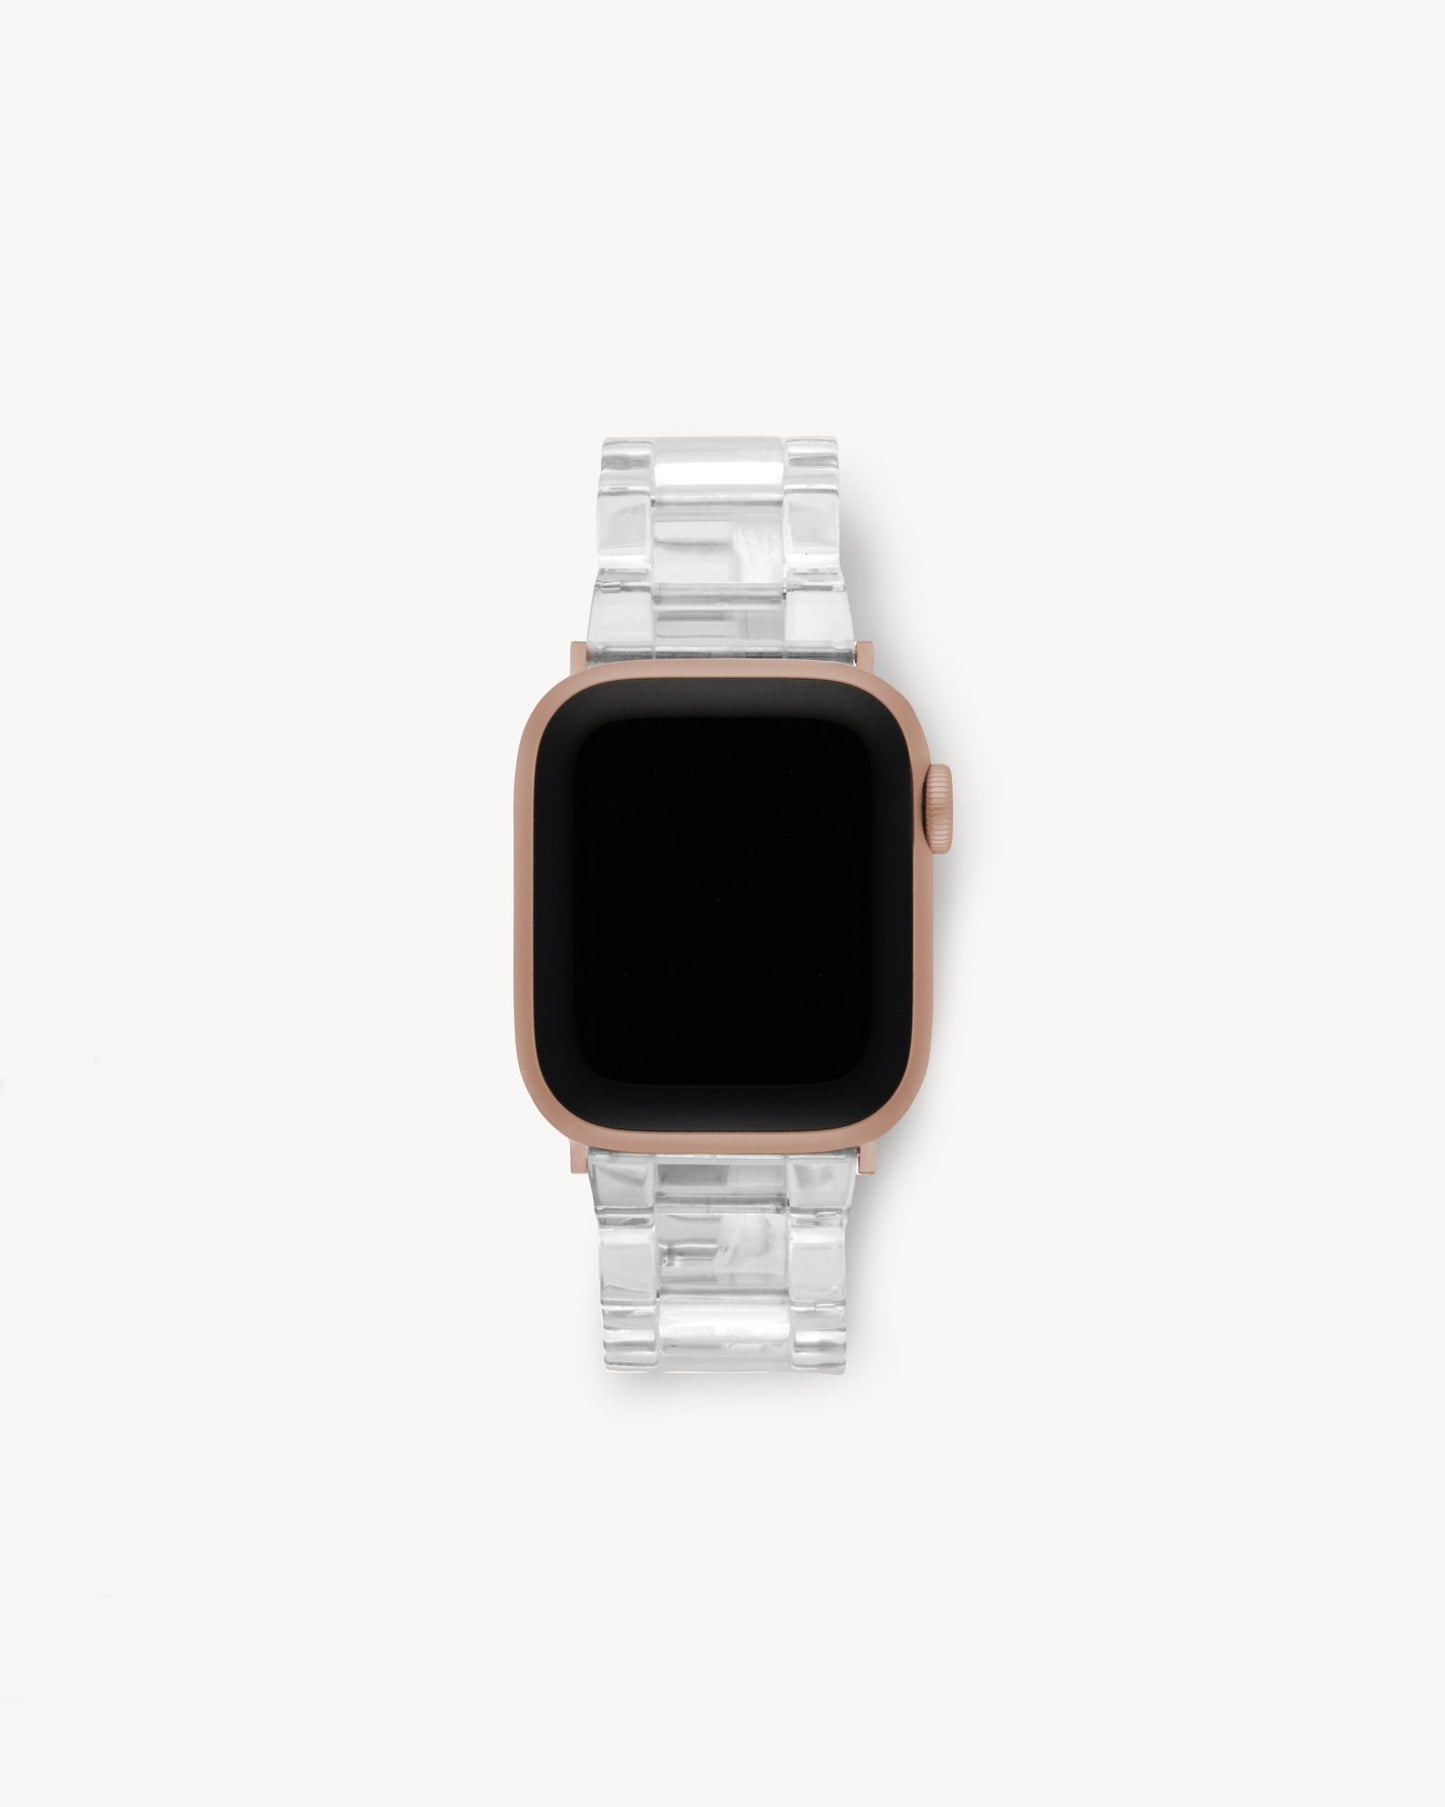 MACHETE Deluxe Apple Watch Band Set in Clear